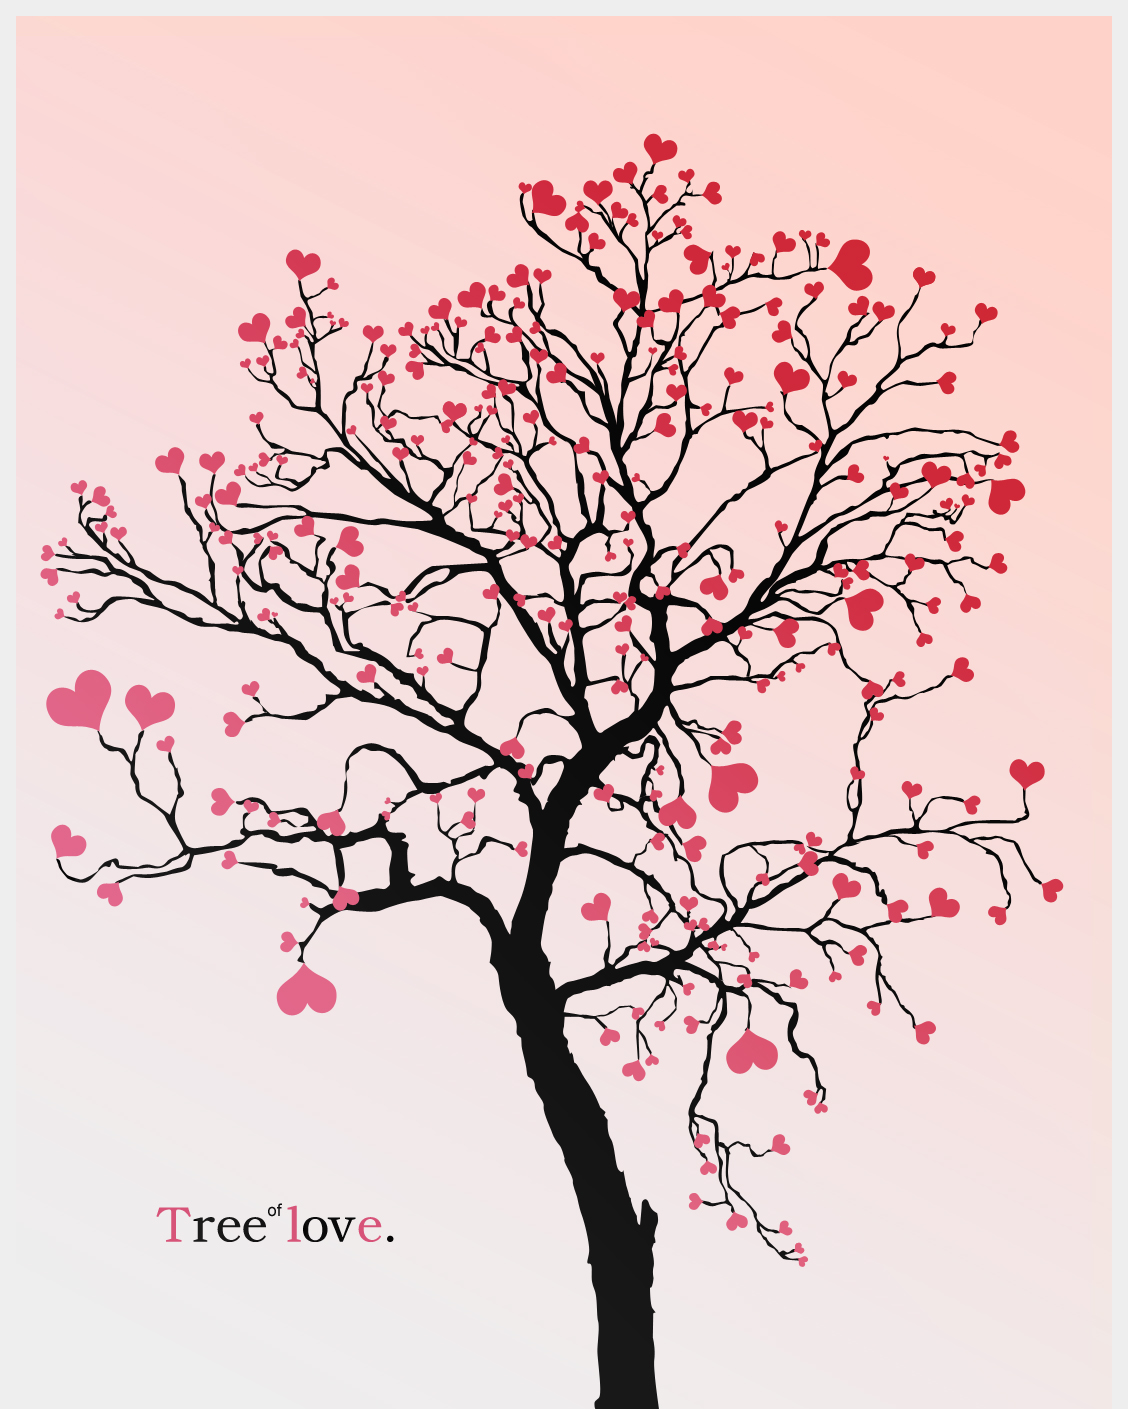 Tree of love.